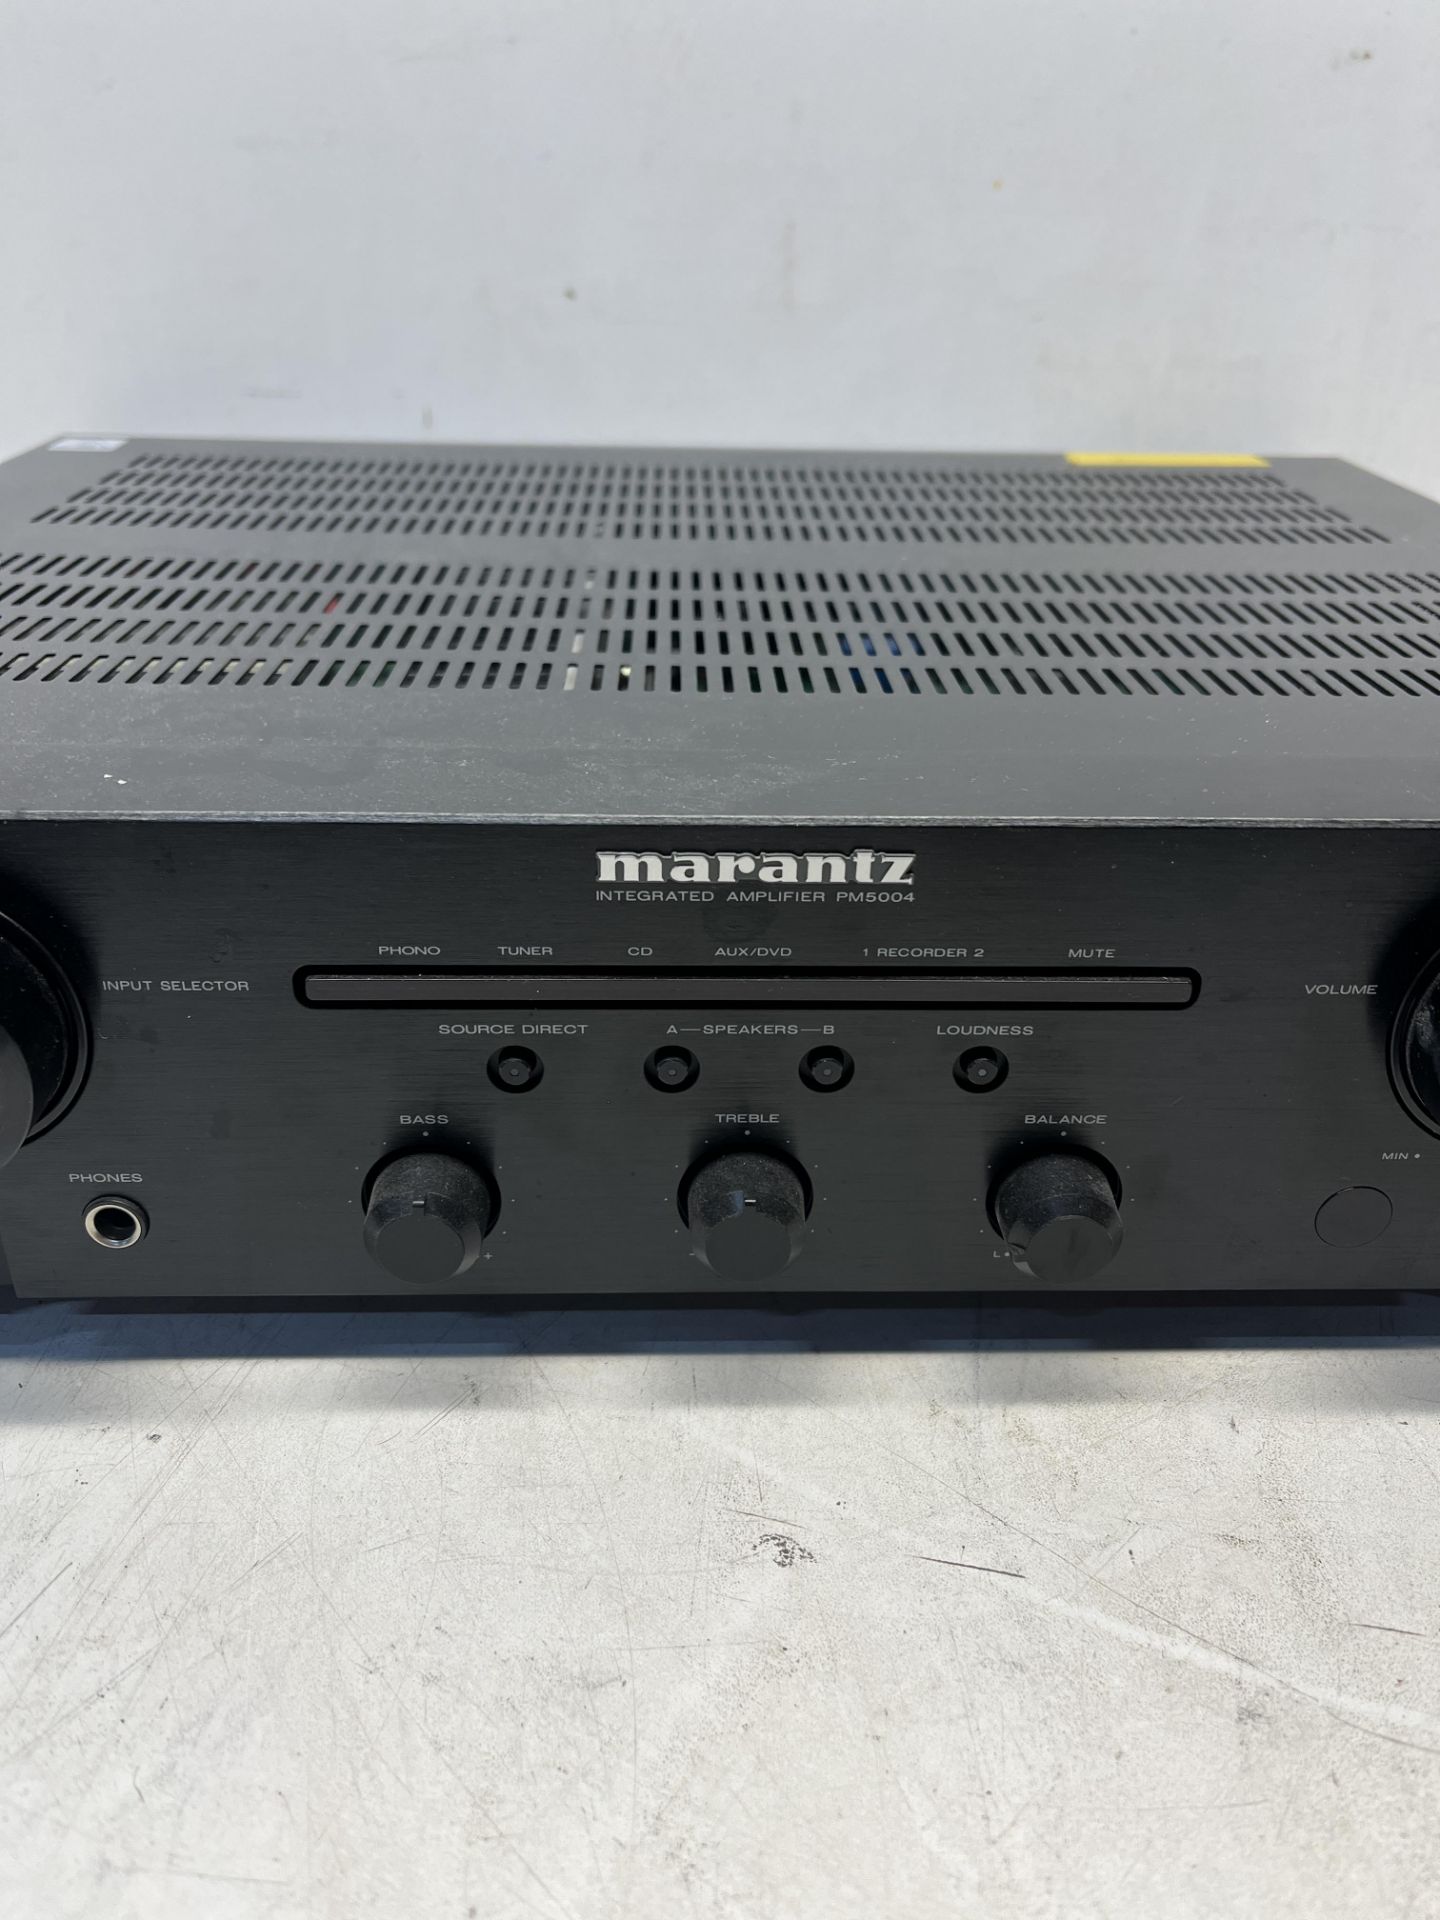 Marantz Integrated Amplifier PM5004 - Image 2 of 7